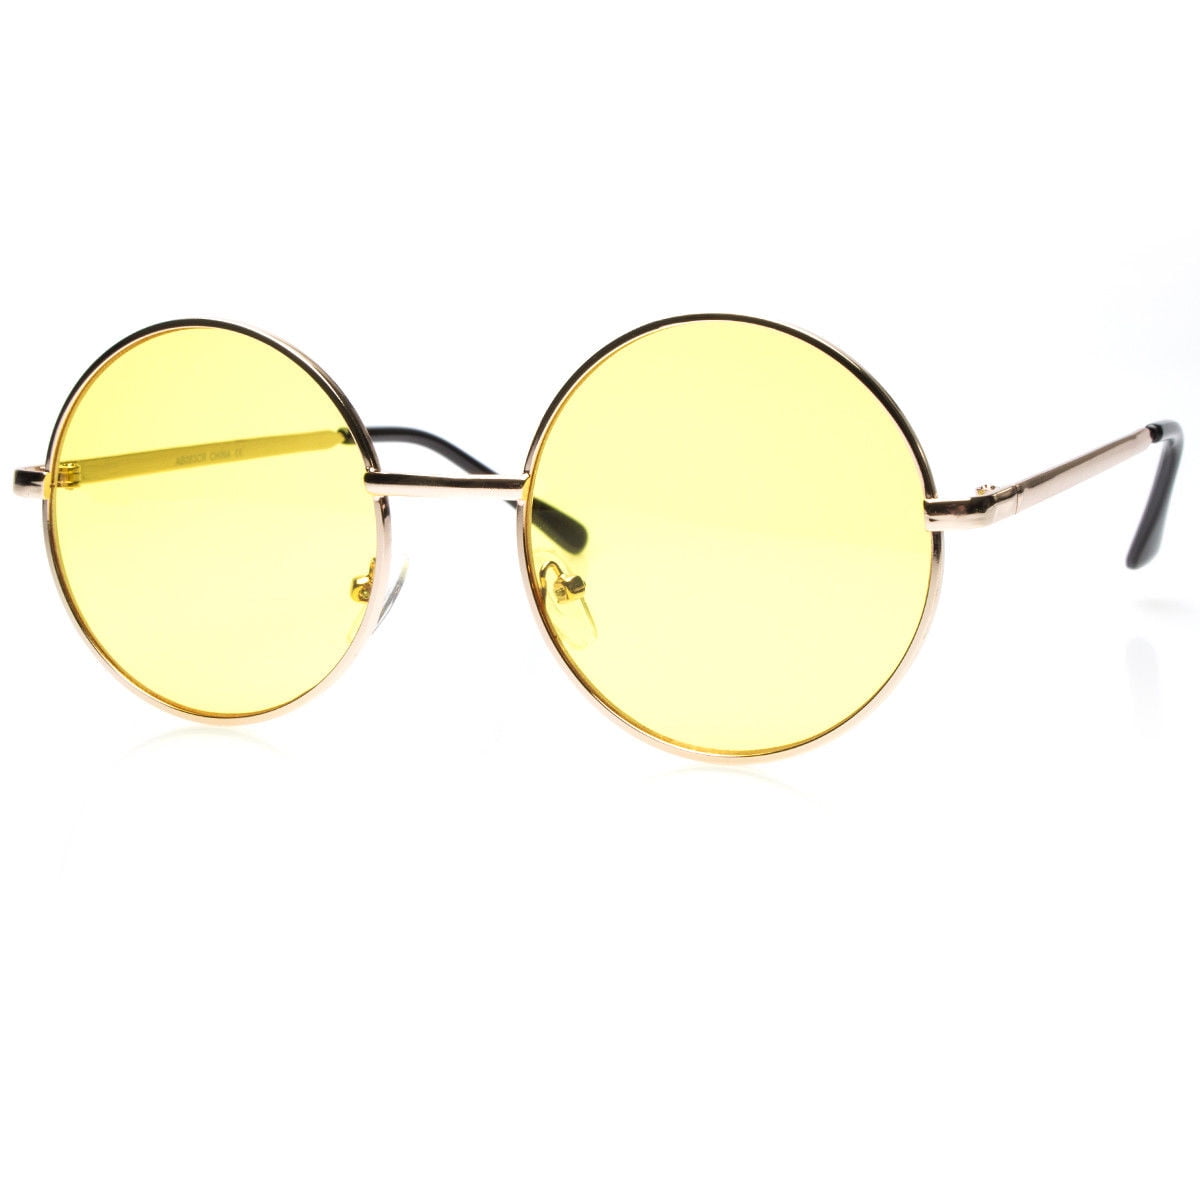 New John Lennon Style Vintage Round Circle Retro Classic Sunglasses Men Women g 